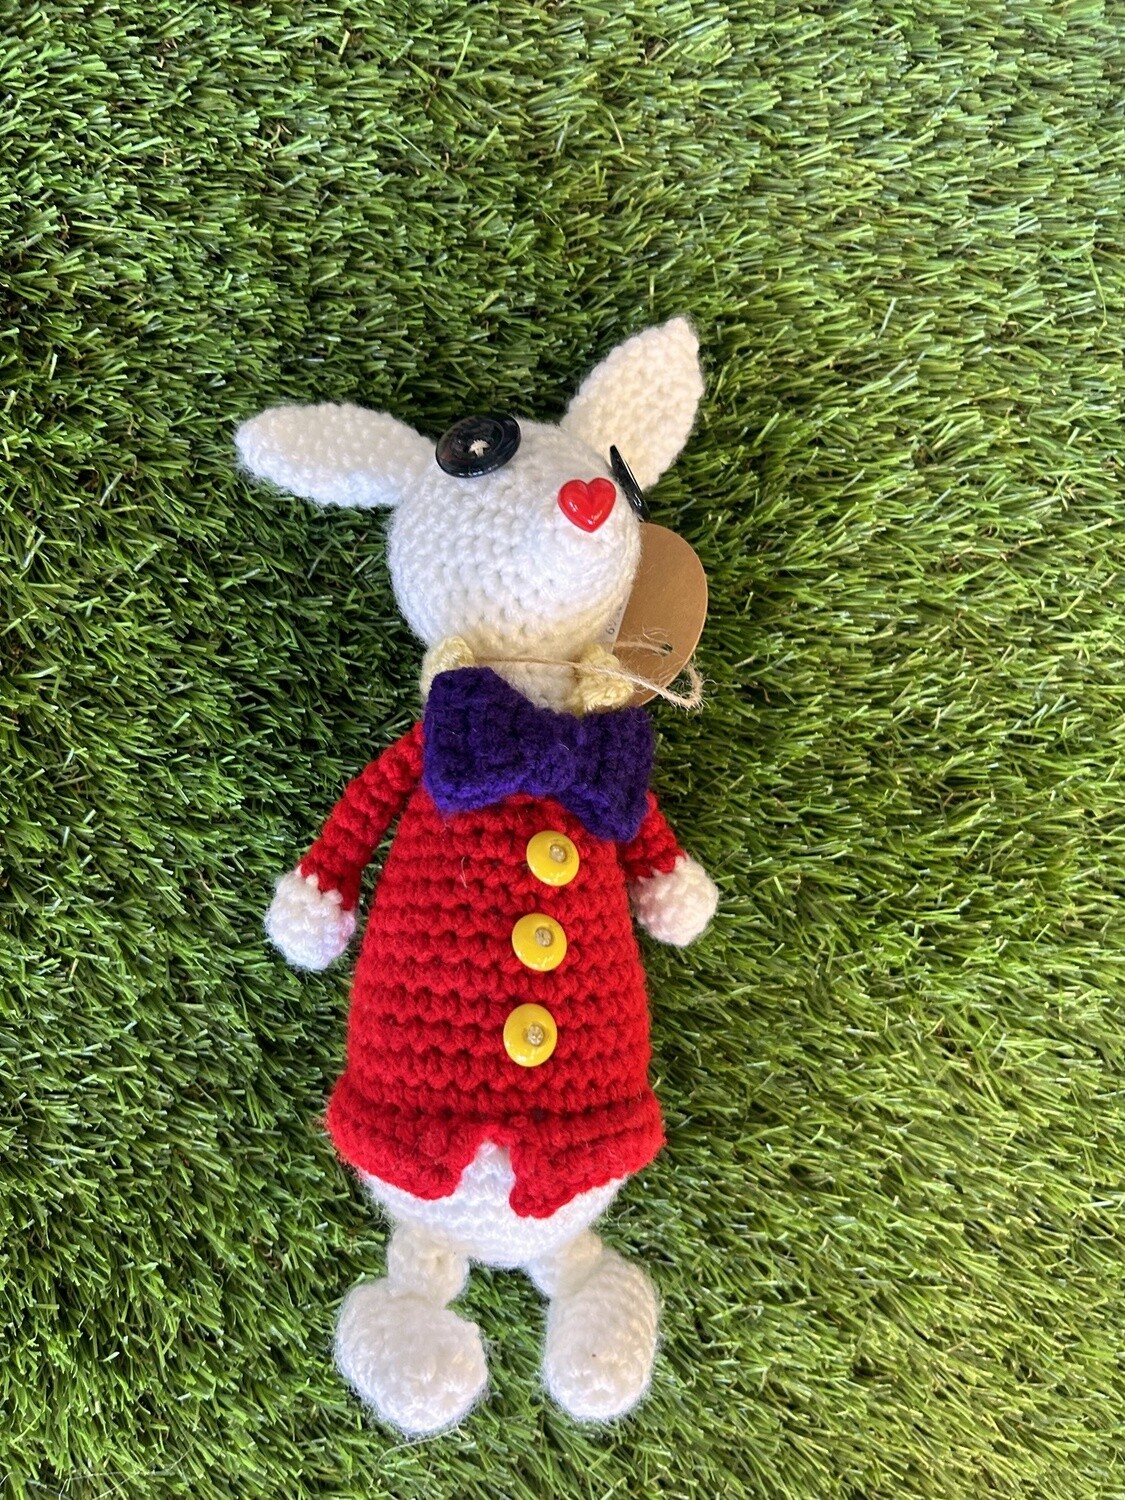 Becca Cook Hand Made Wonderland Art, Name: Rabbit